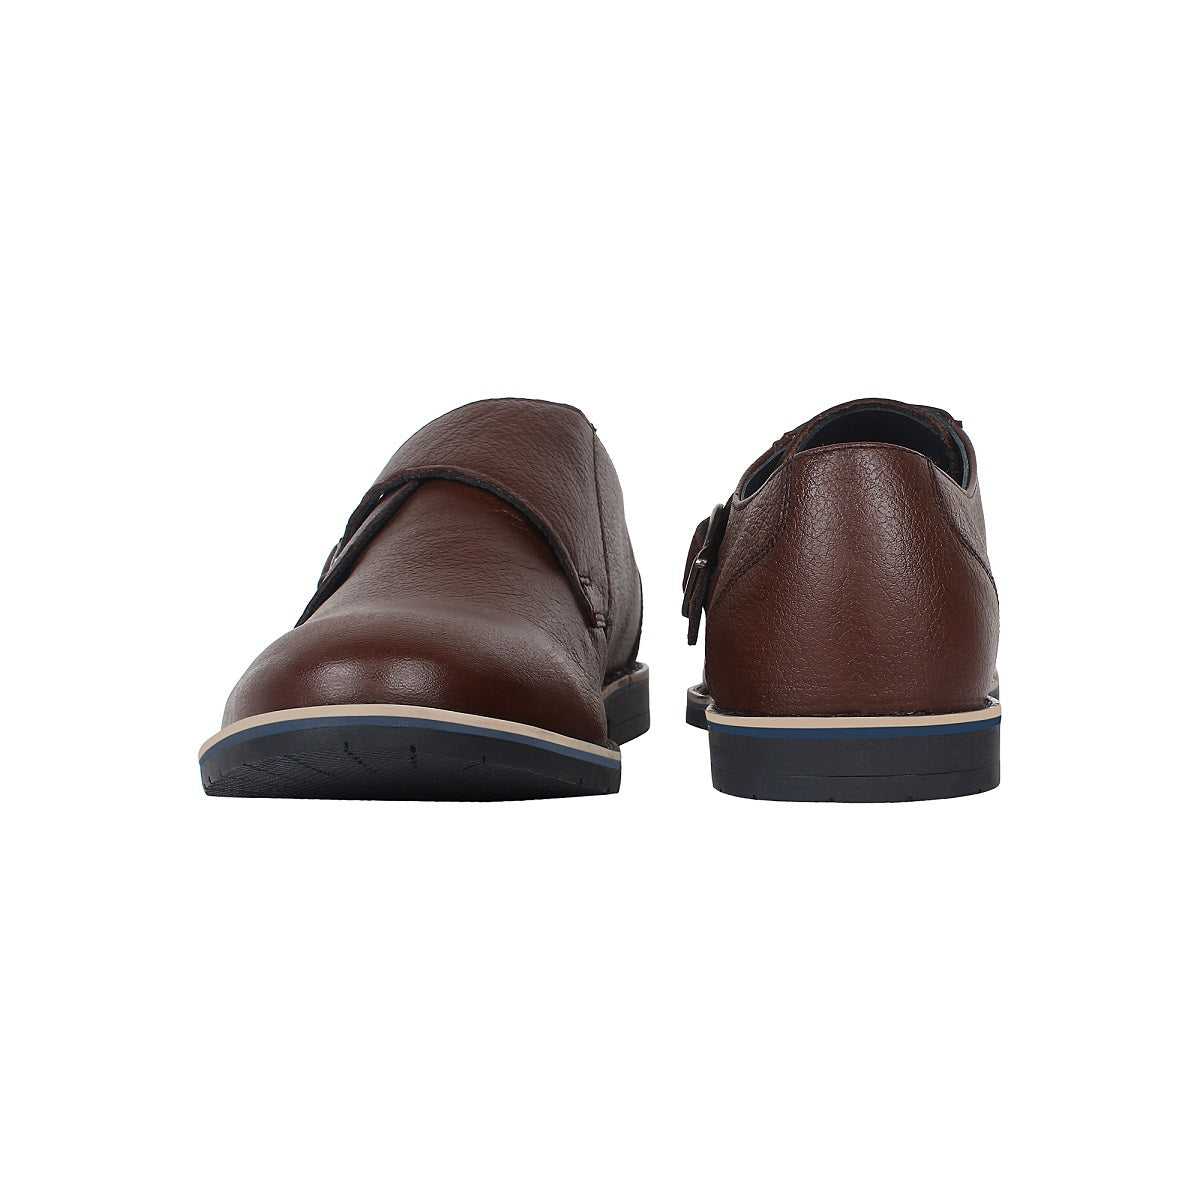 Brown Monk Strap Shoes -Defective